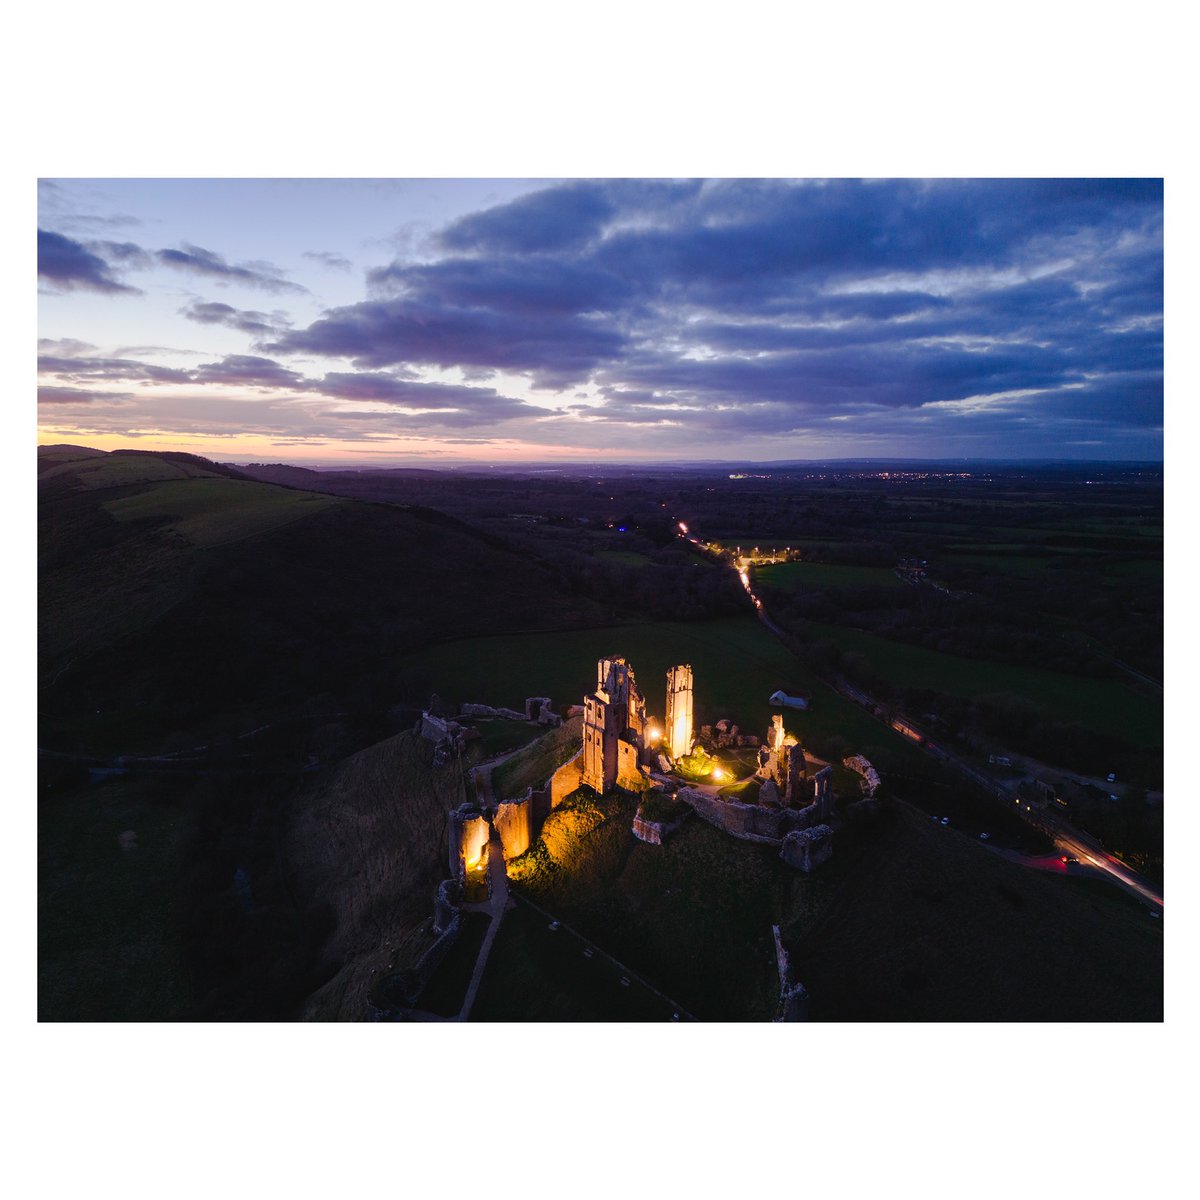 Sunset at Corfe Castle © Chris Bailey 2024 📸

#CorfeCastle #Wareham #DJI #Drone #Droneograph #ArielPhotography #DronePhotography #Castle #History #Ruins #Photography #Photographer #VisitEngland #Corfe 

@CorfeCastleUK 📸